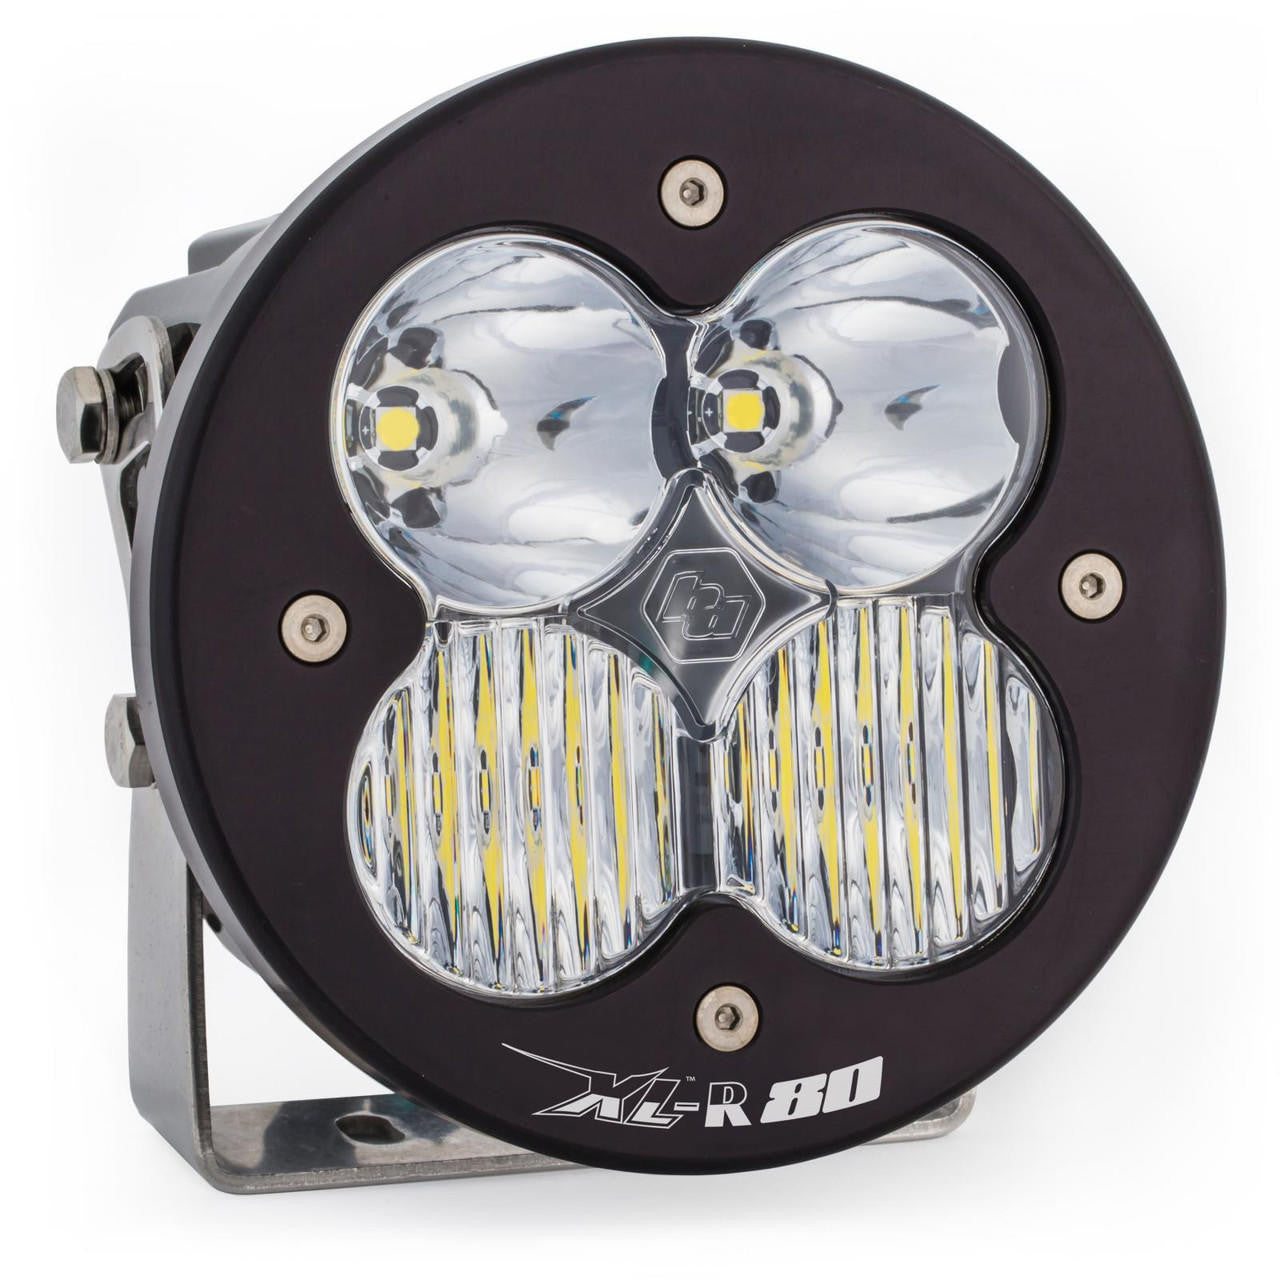  Baja Designs XL-R 80 LED Light Pod, Driving/Combo Pattern, Clear 760003 